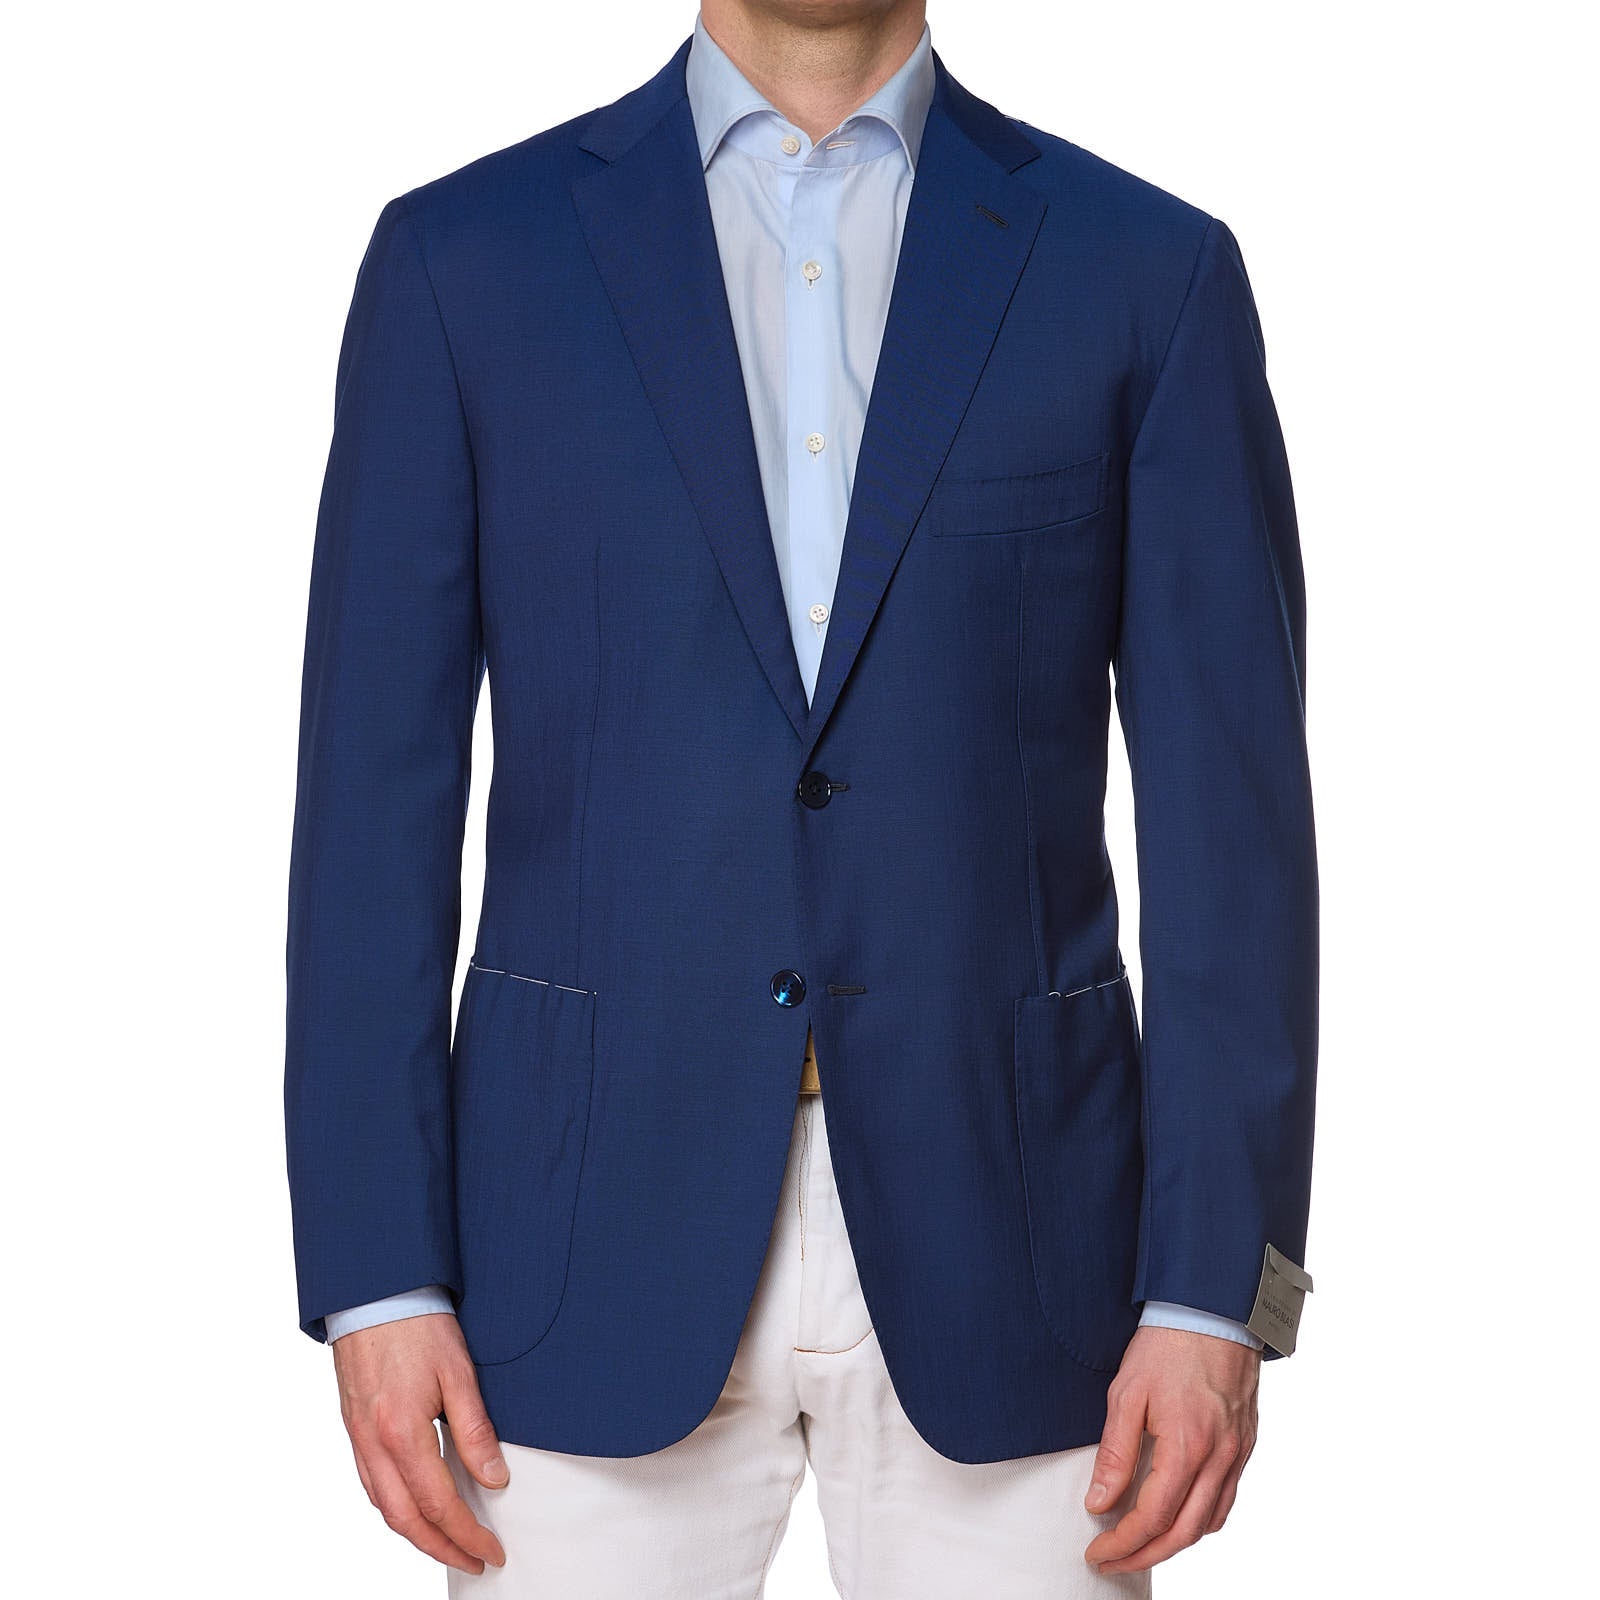 MAURO BLASI x VANNUCCI Handmade Blue Wool Jacket Blazer EU 54 NEW US 42 Slim